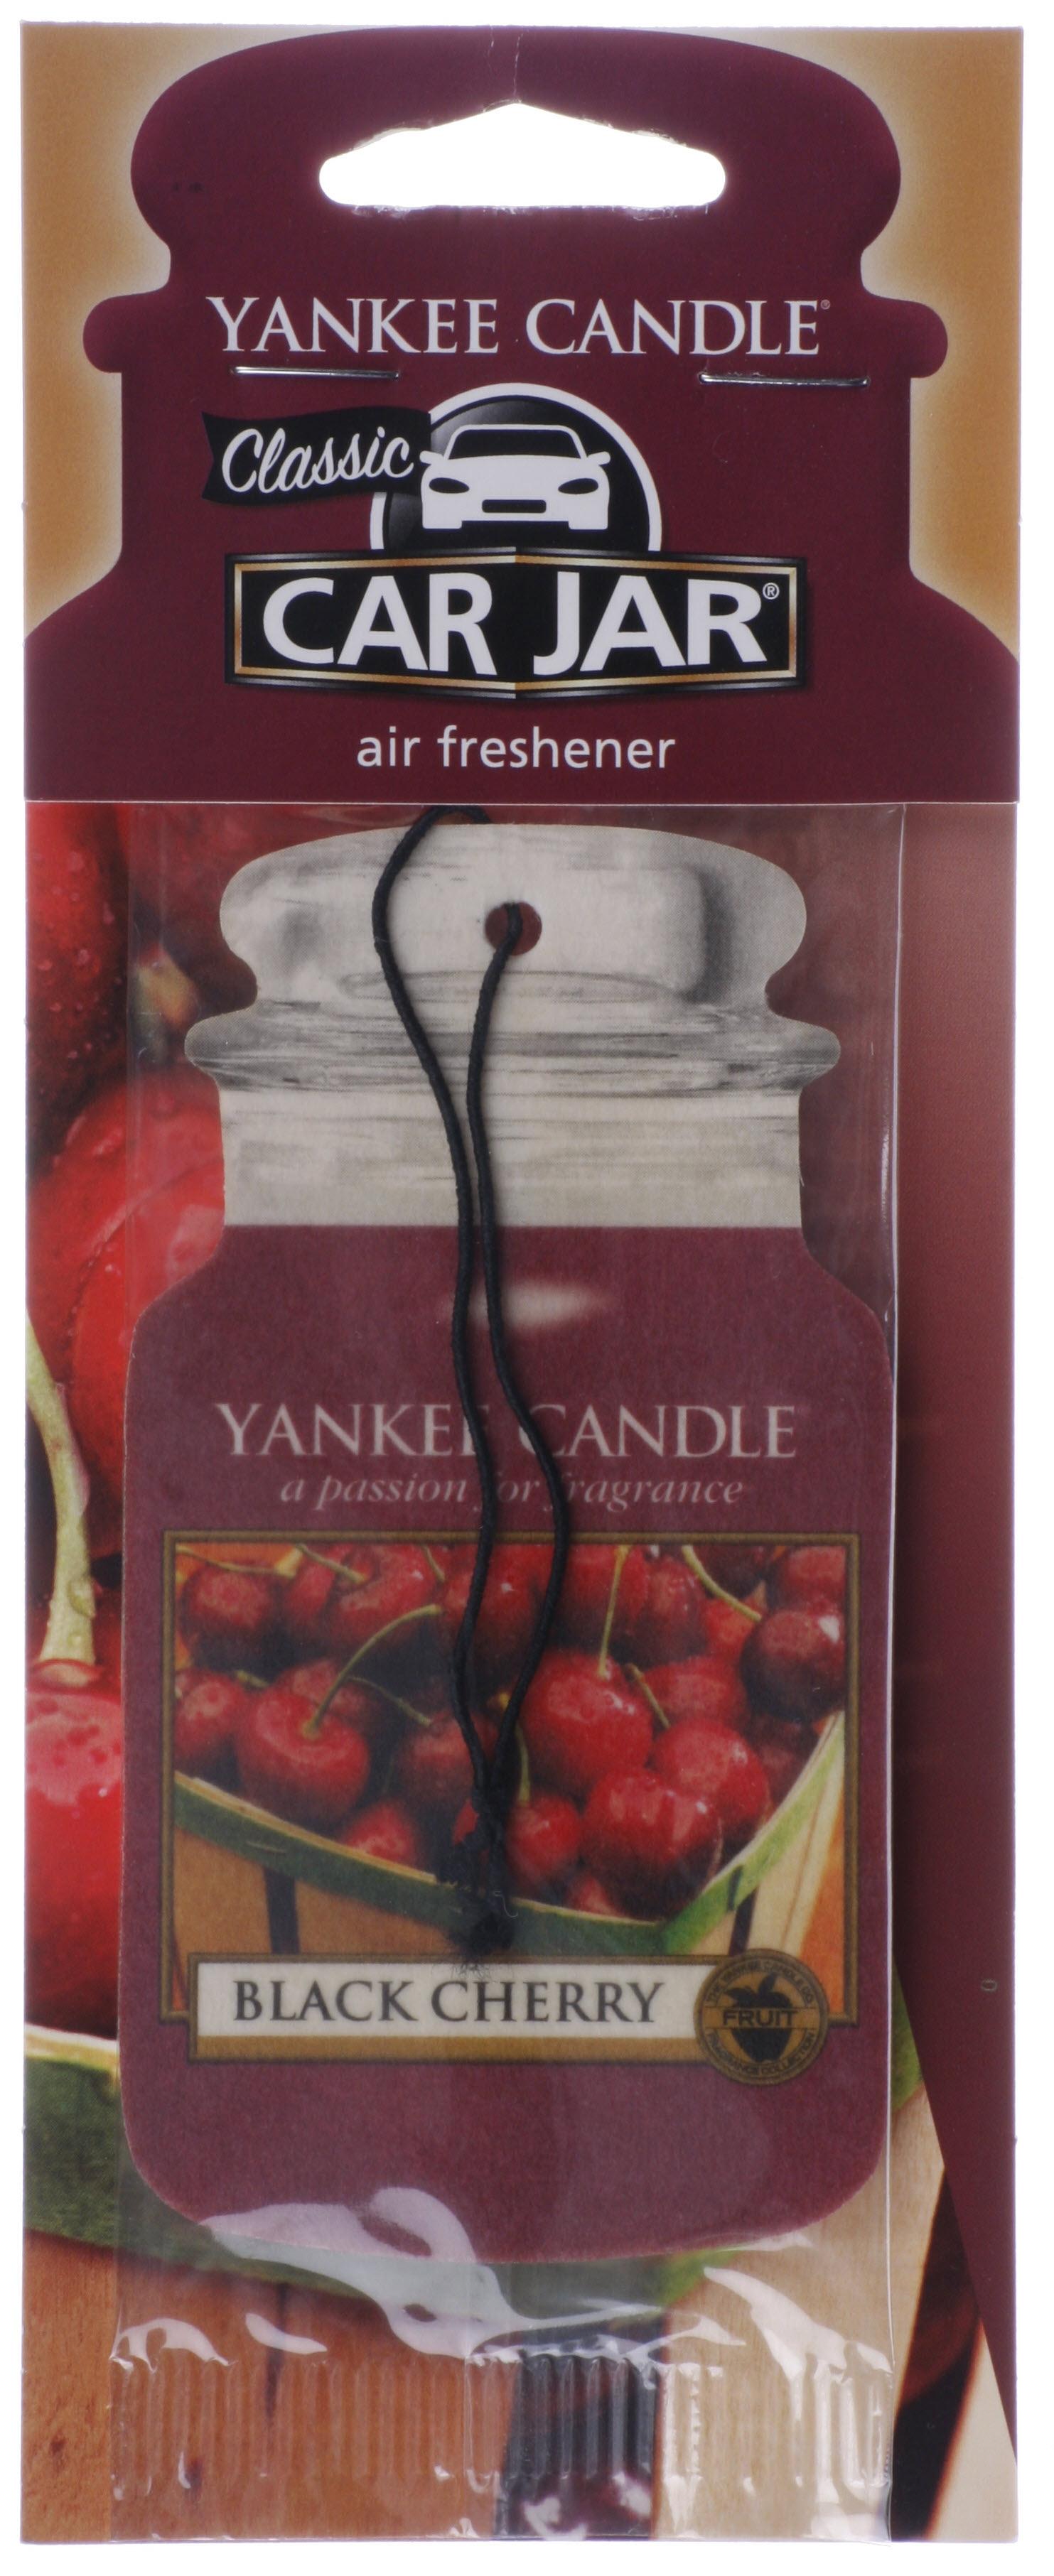 Yankee Candle Car Jar Air Freshener In Black Cherry